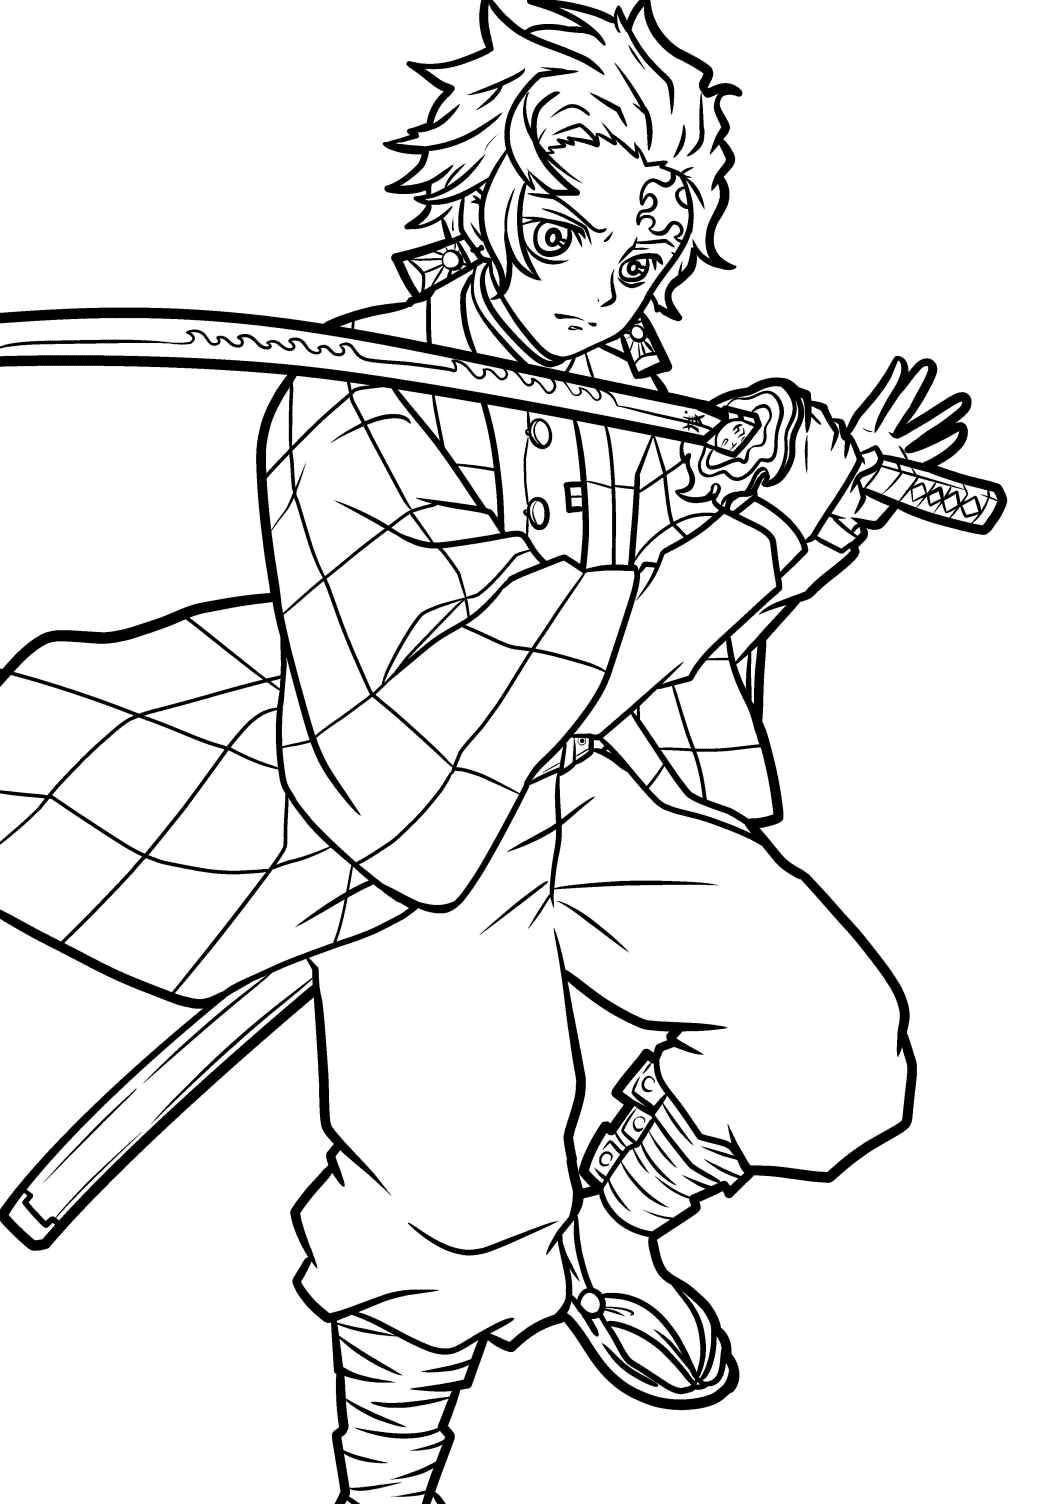 Tanjiro met zwaard van Tanjiro